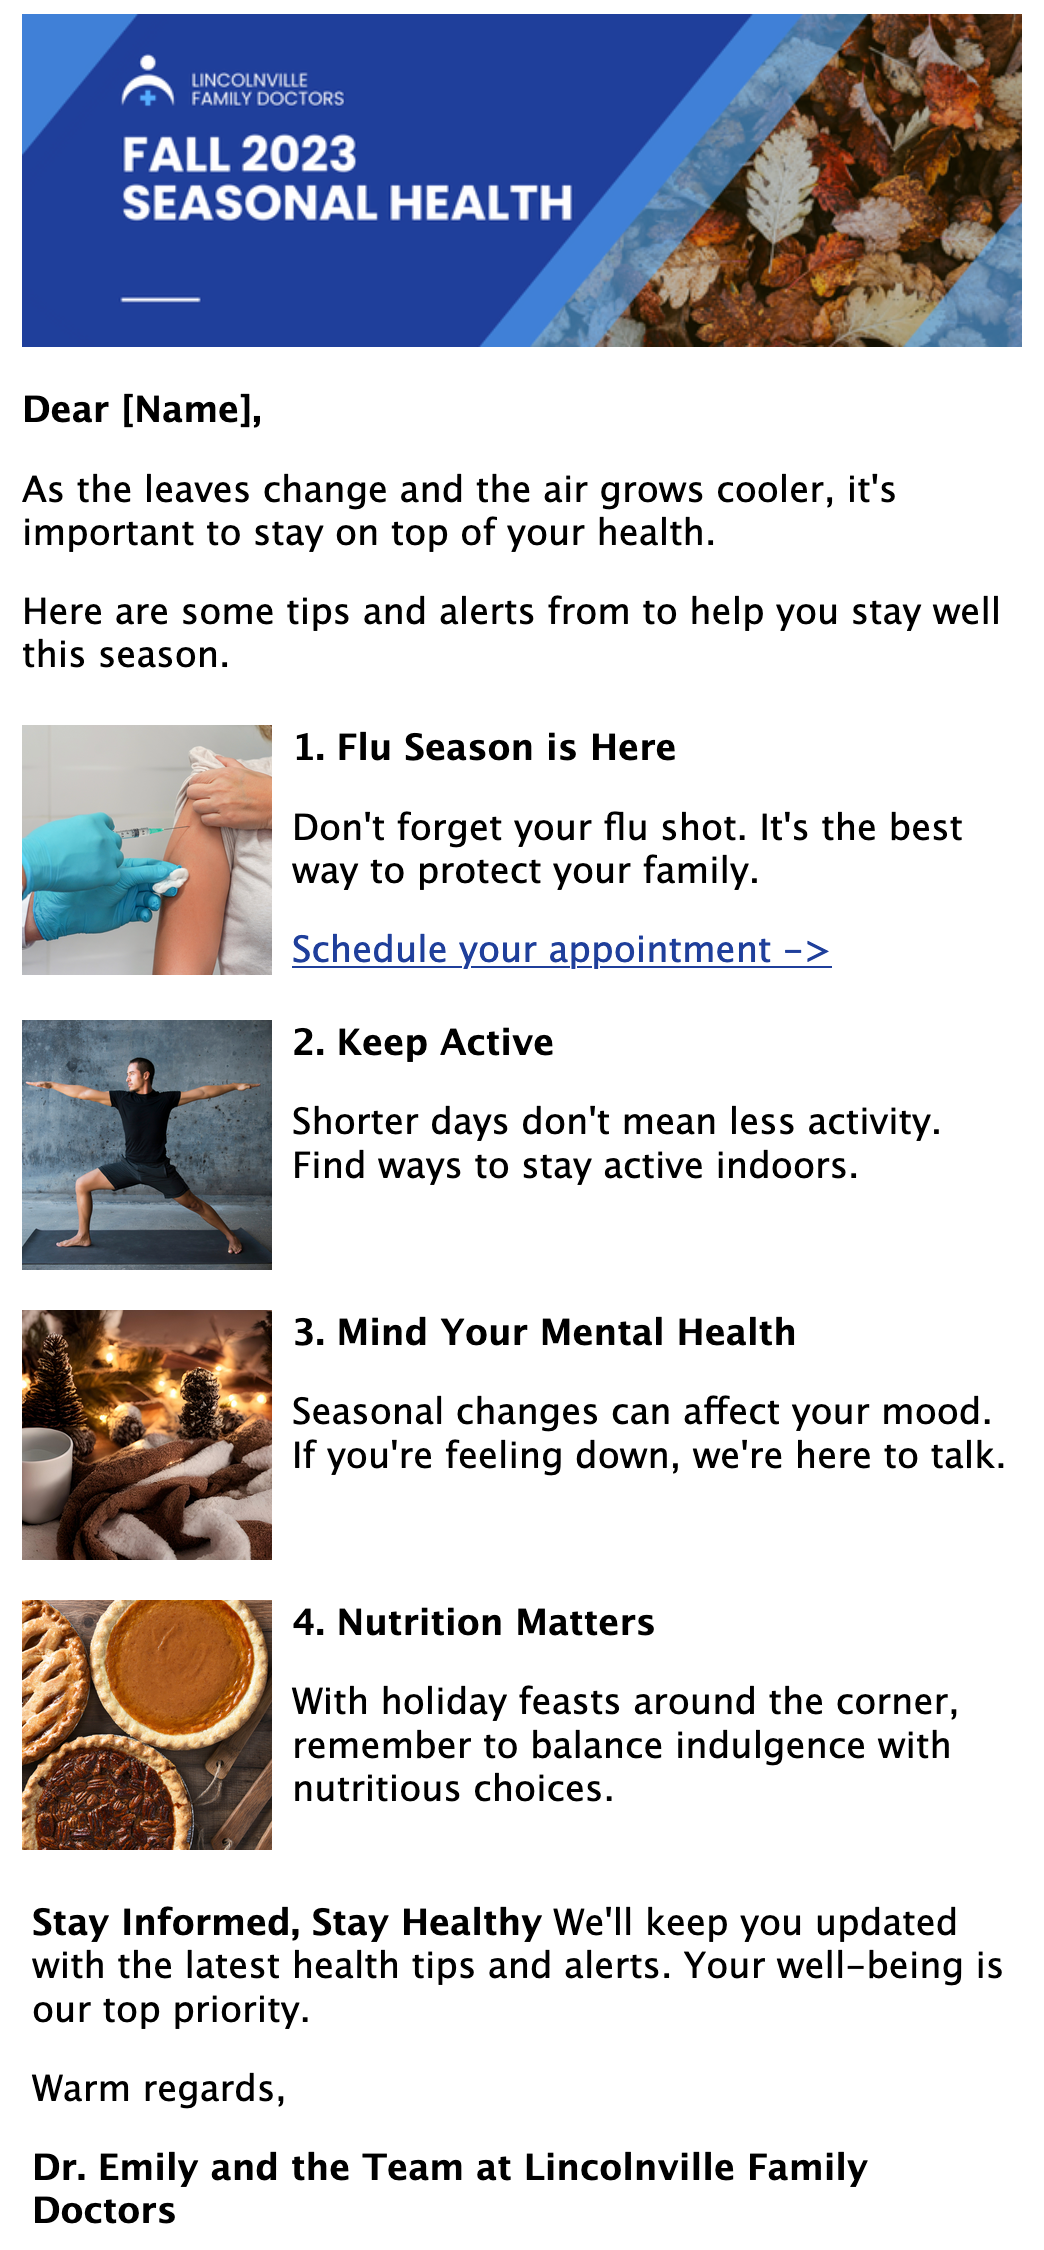 Seasonal health alert email example